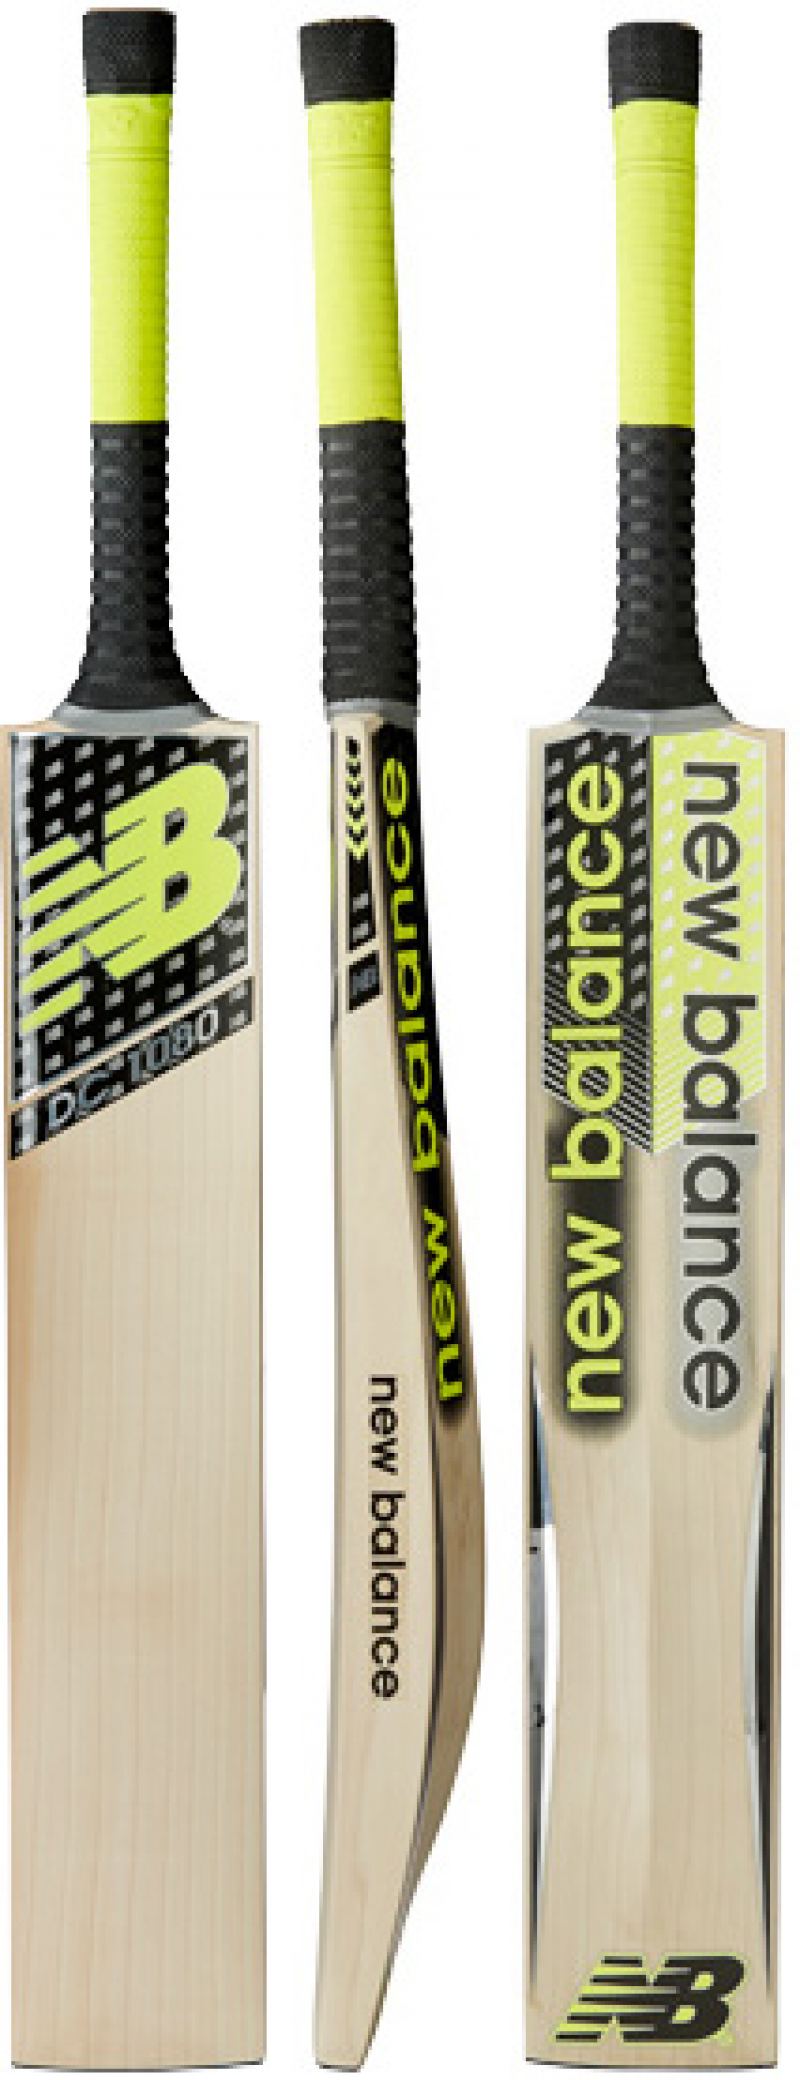 2017 new balance dc 1080 cricket bat